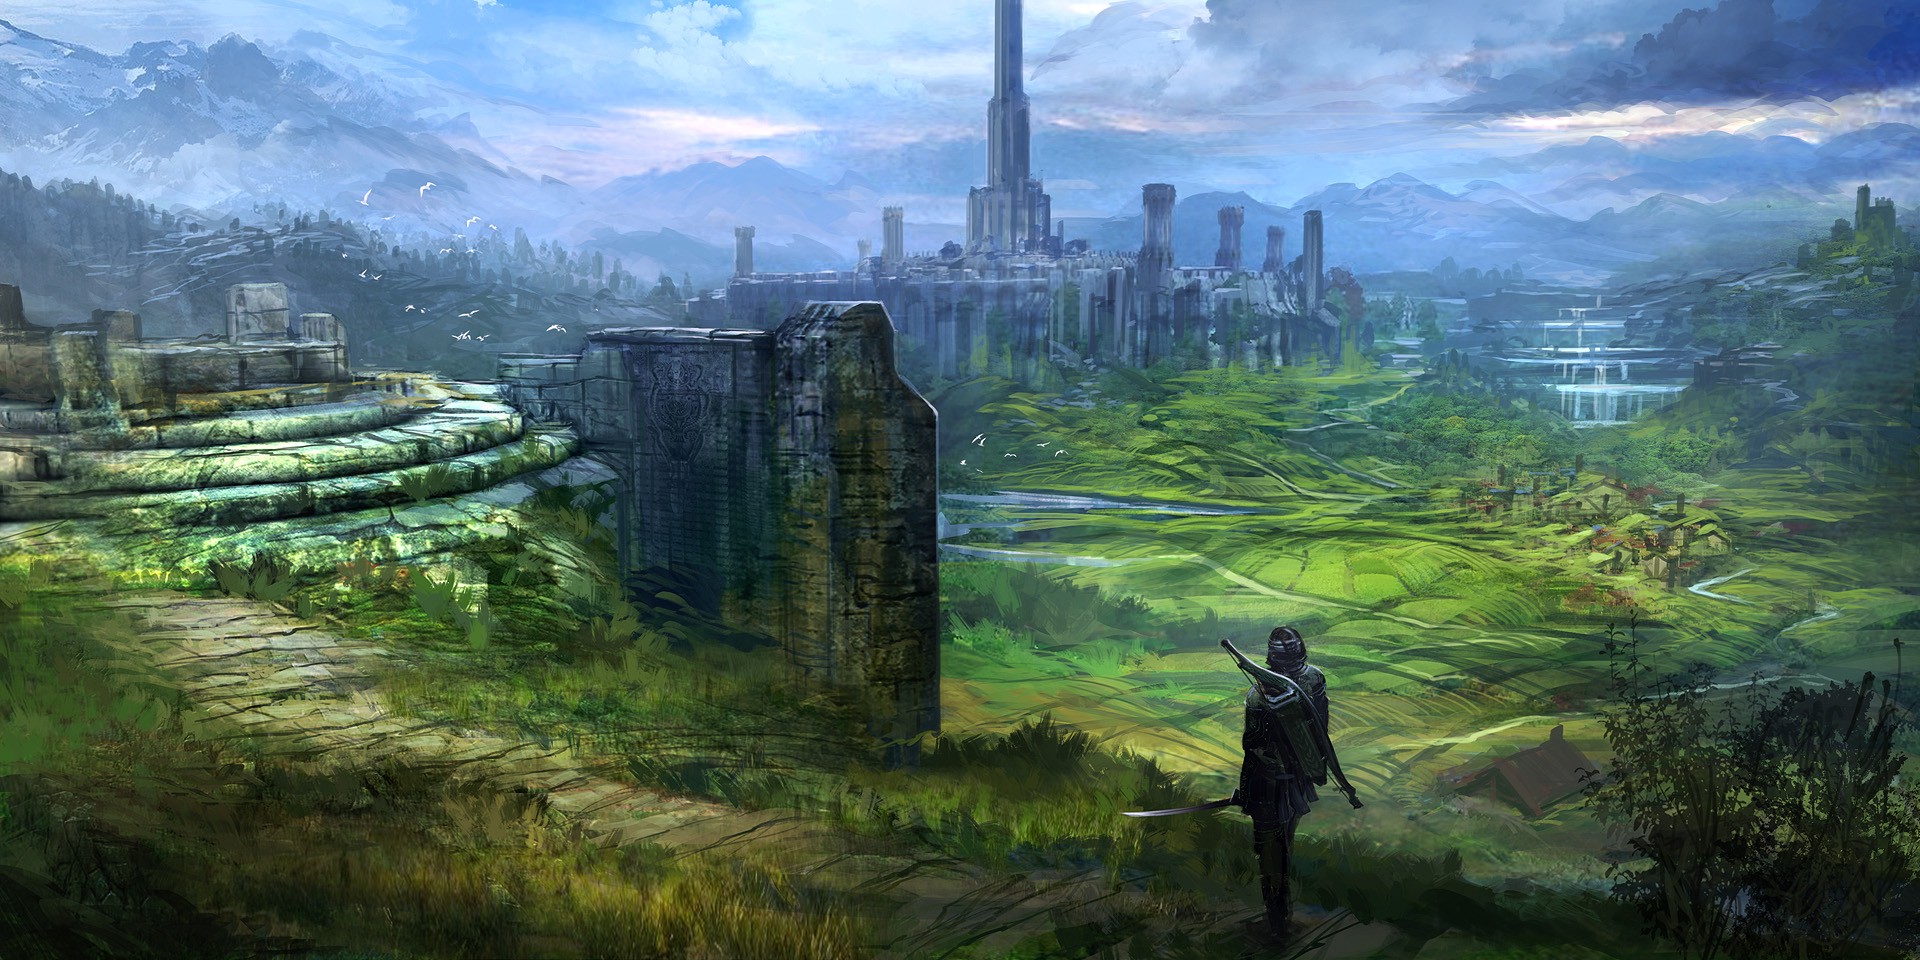 The Elder Scrolls IV: Oblivion, Video Games, RPG, Imperial City, Artwork, Concept Art, Digital Art, Medieval, Bows, Sword, Warrior, Tower, Valley, Mountain, Landscape, Feng Zhu Wallpaper